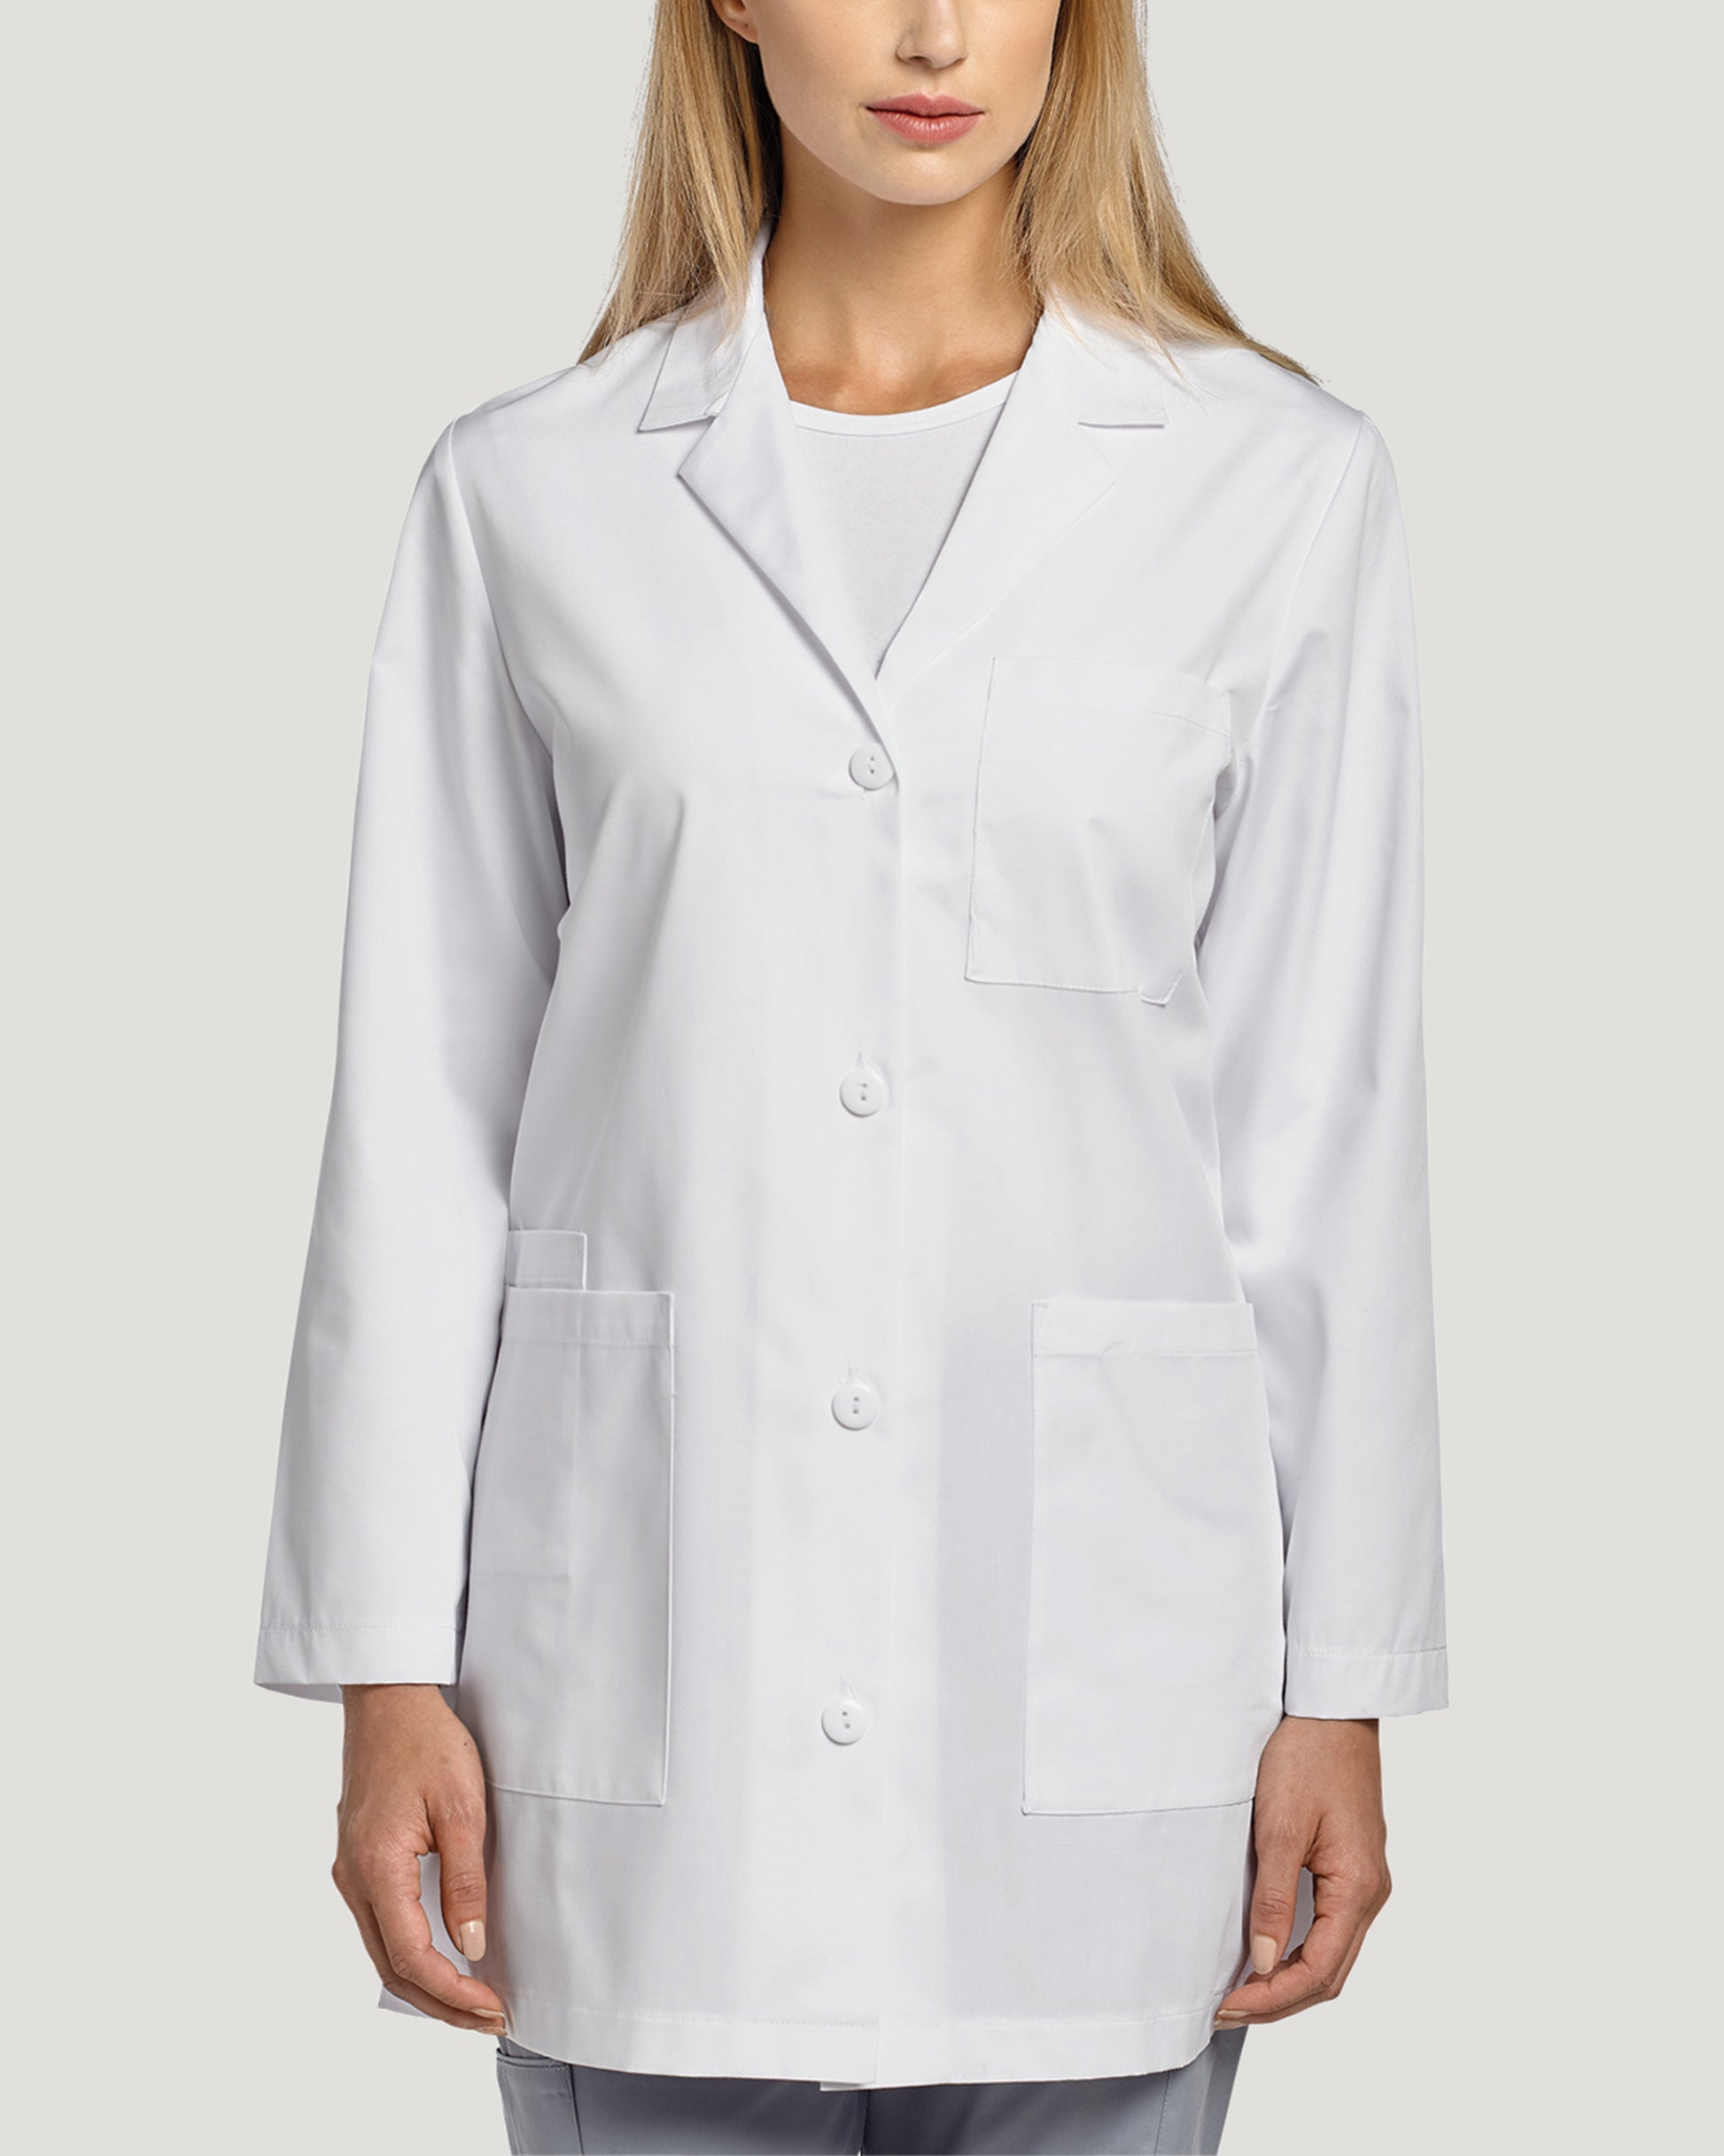 White Cross - 32'' White Lab Coat Women's Lab Coat White Cross   